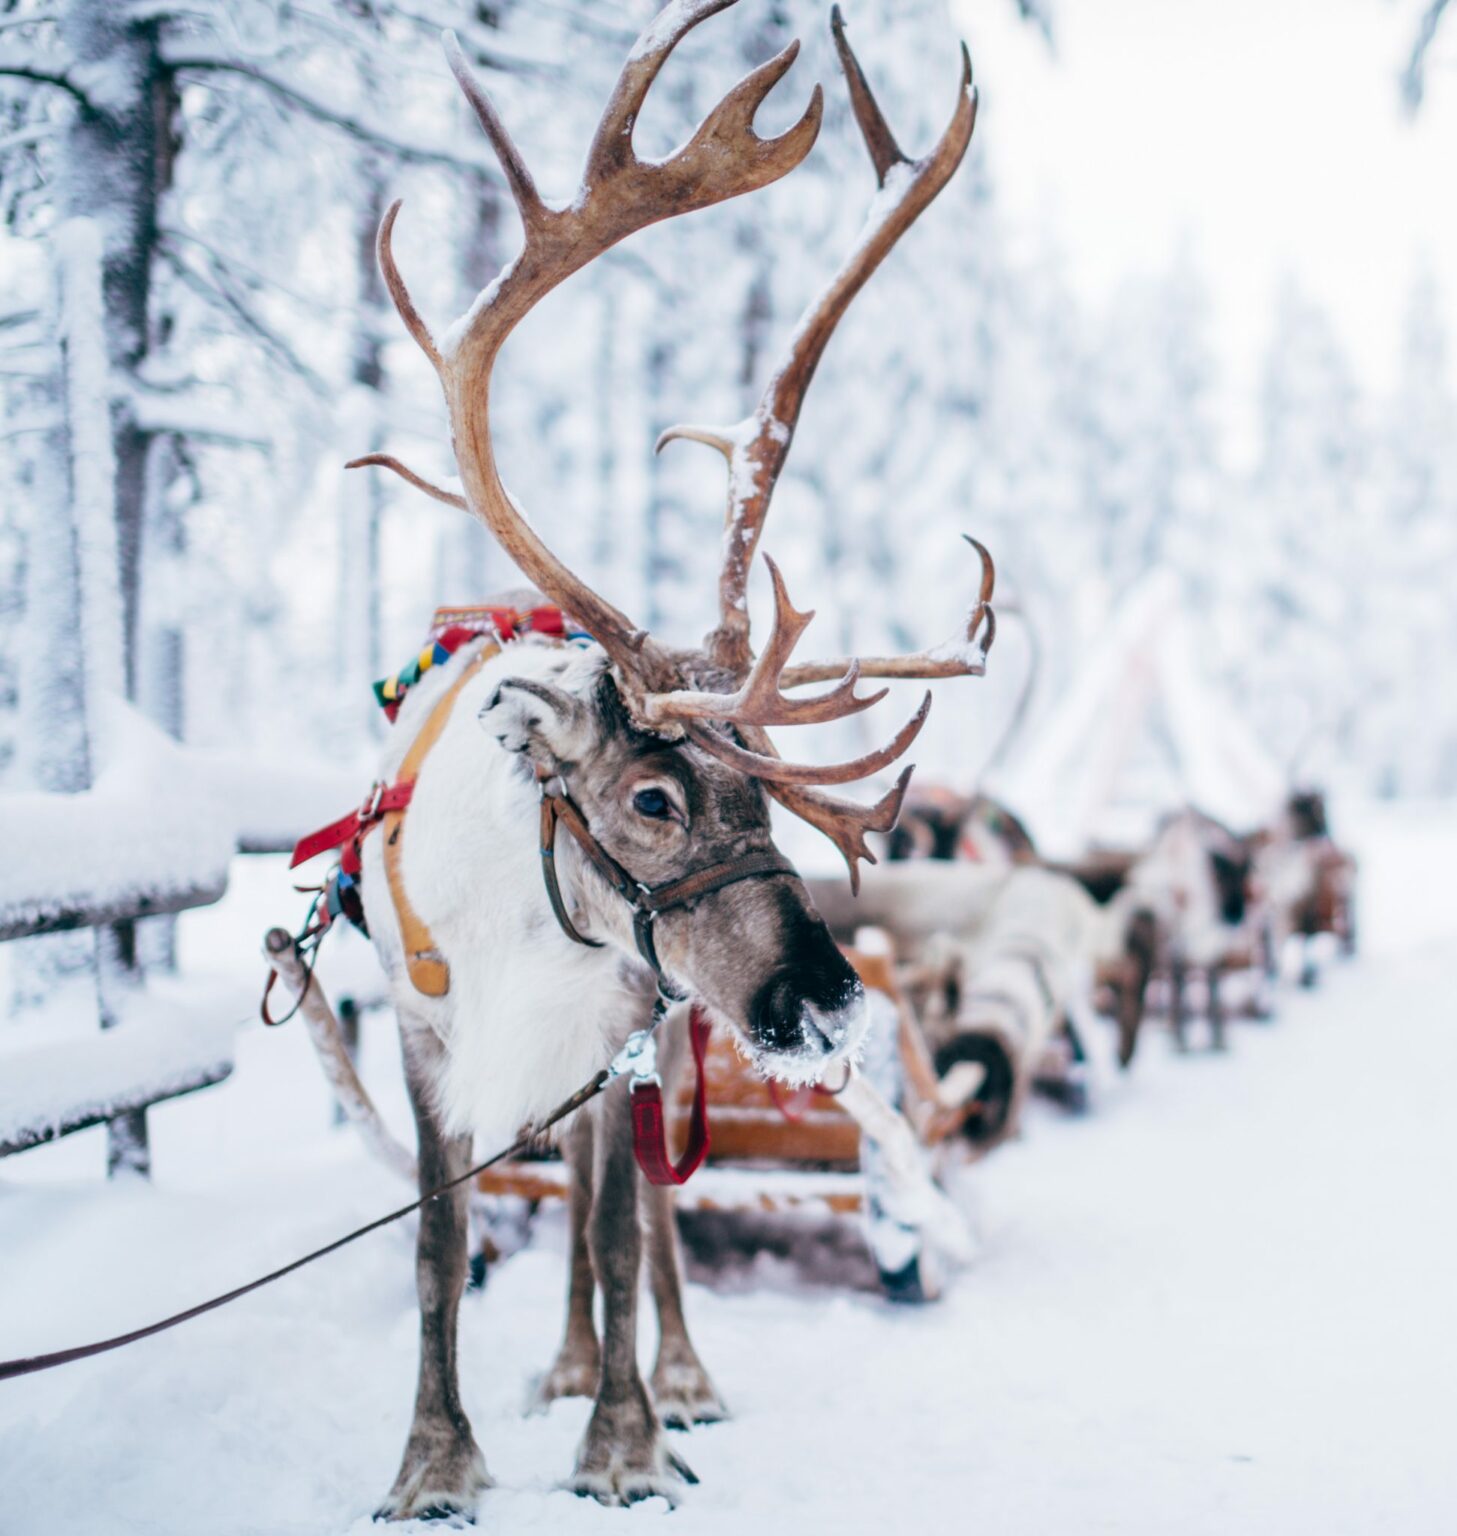 Trip To Arctic Circle, Santa Claus Village And Santas Reindeer